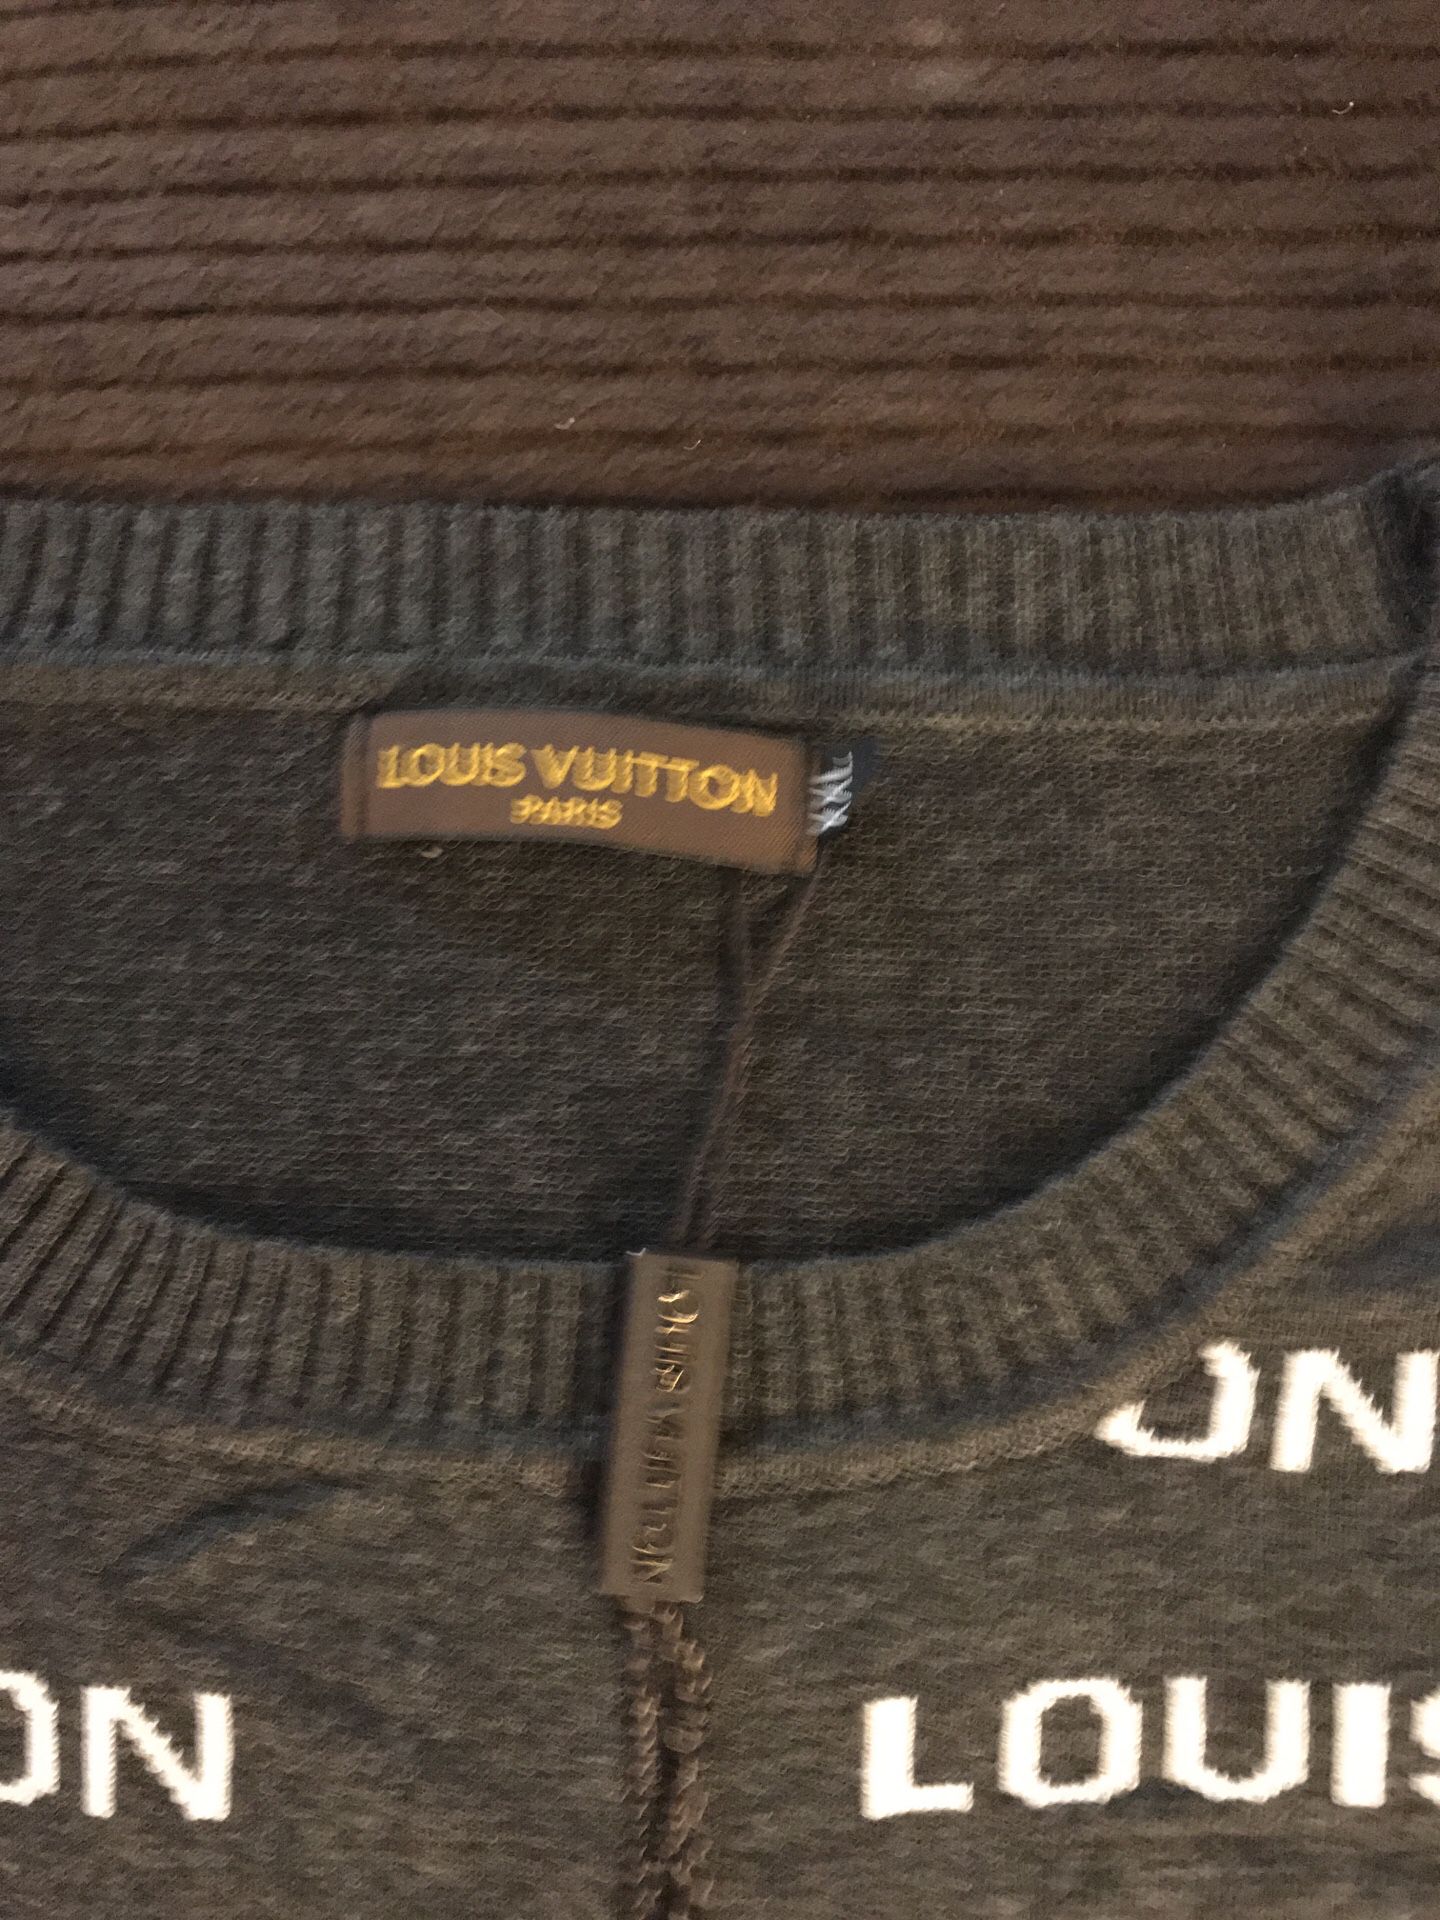 Louis Vuitton Sweatsuit for Sale in Los Angeles, CA - OfferUp